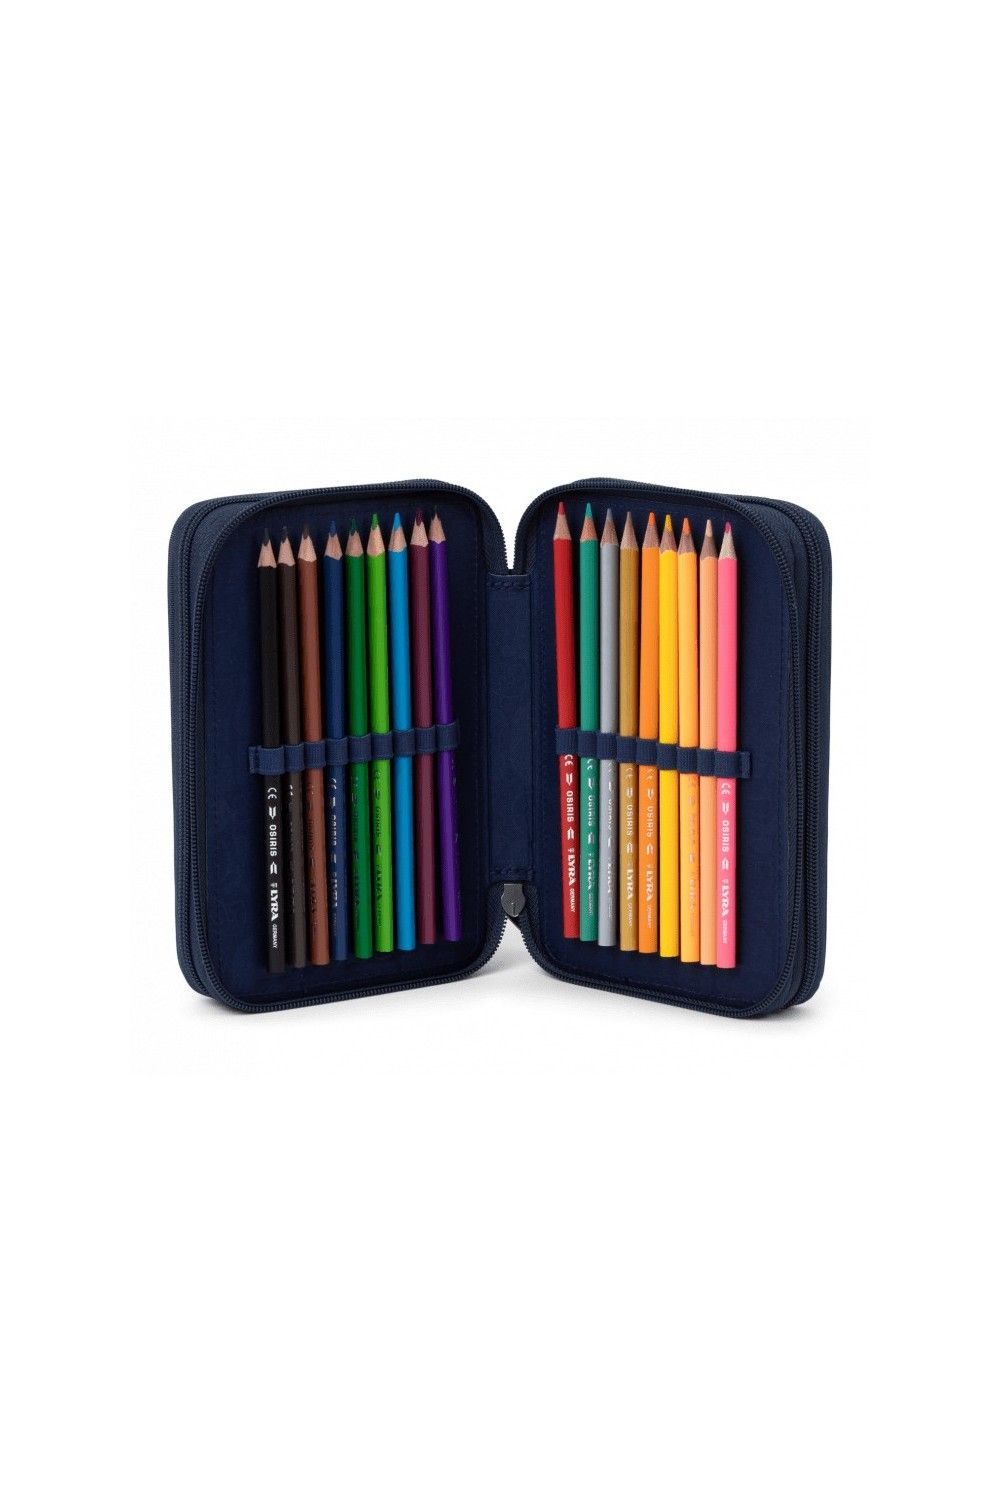 Ergobag maxi pencil case SuBärkraft